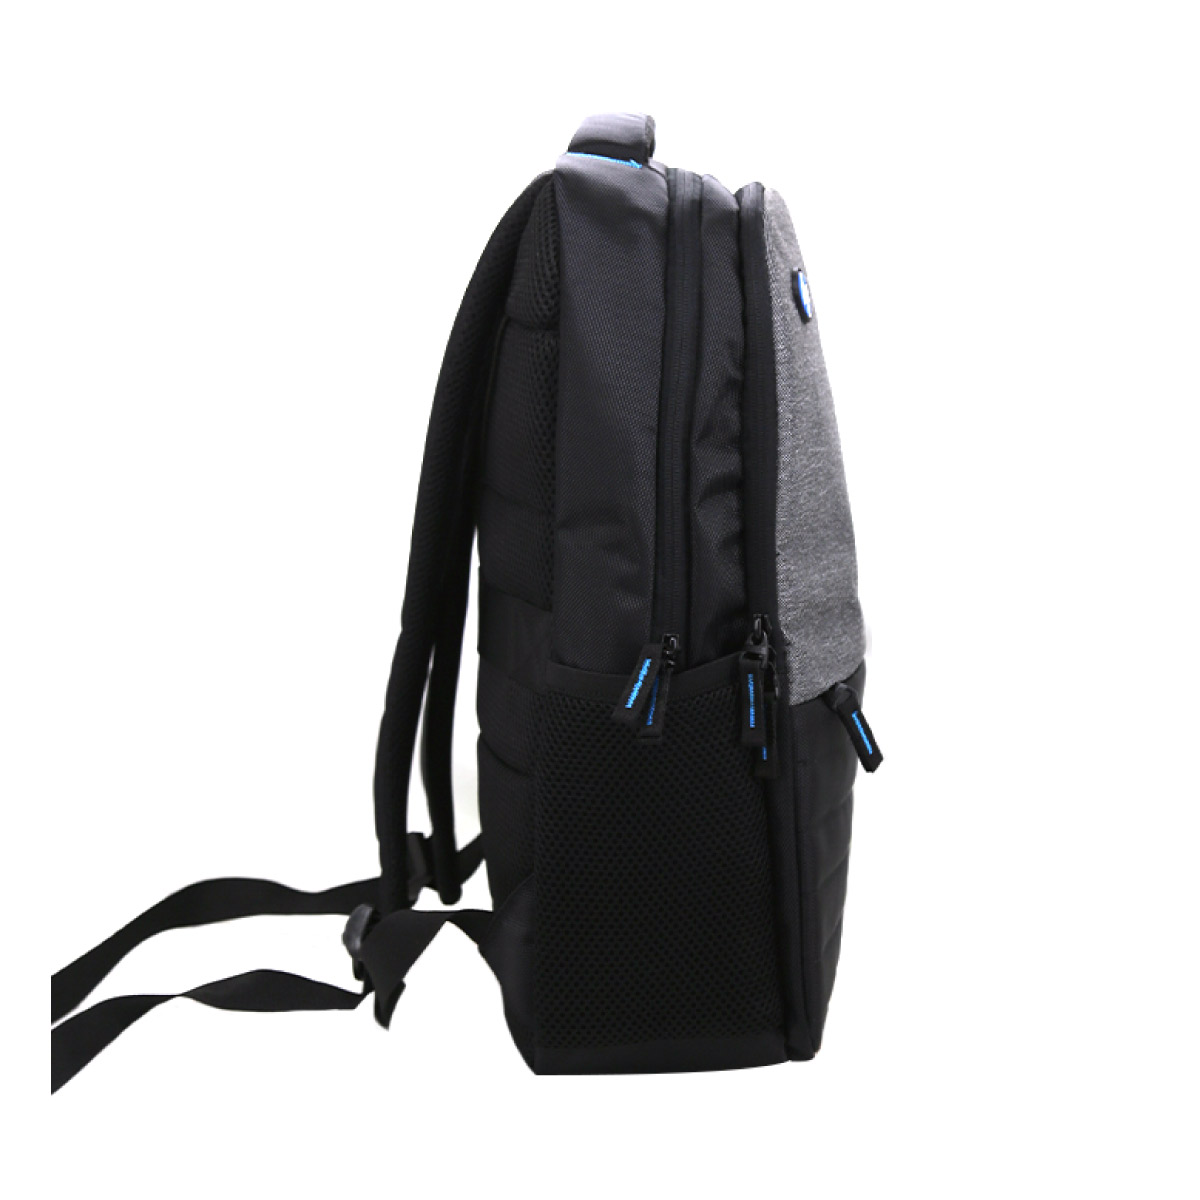 HP 156 Duotone GreyGreen Backpack Laptops Bags Price in Siliguri